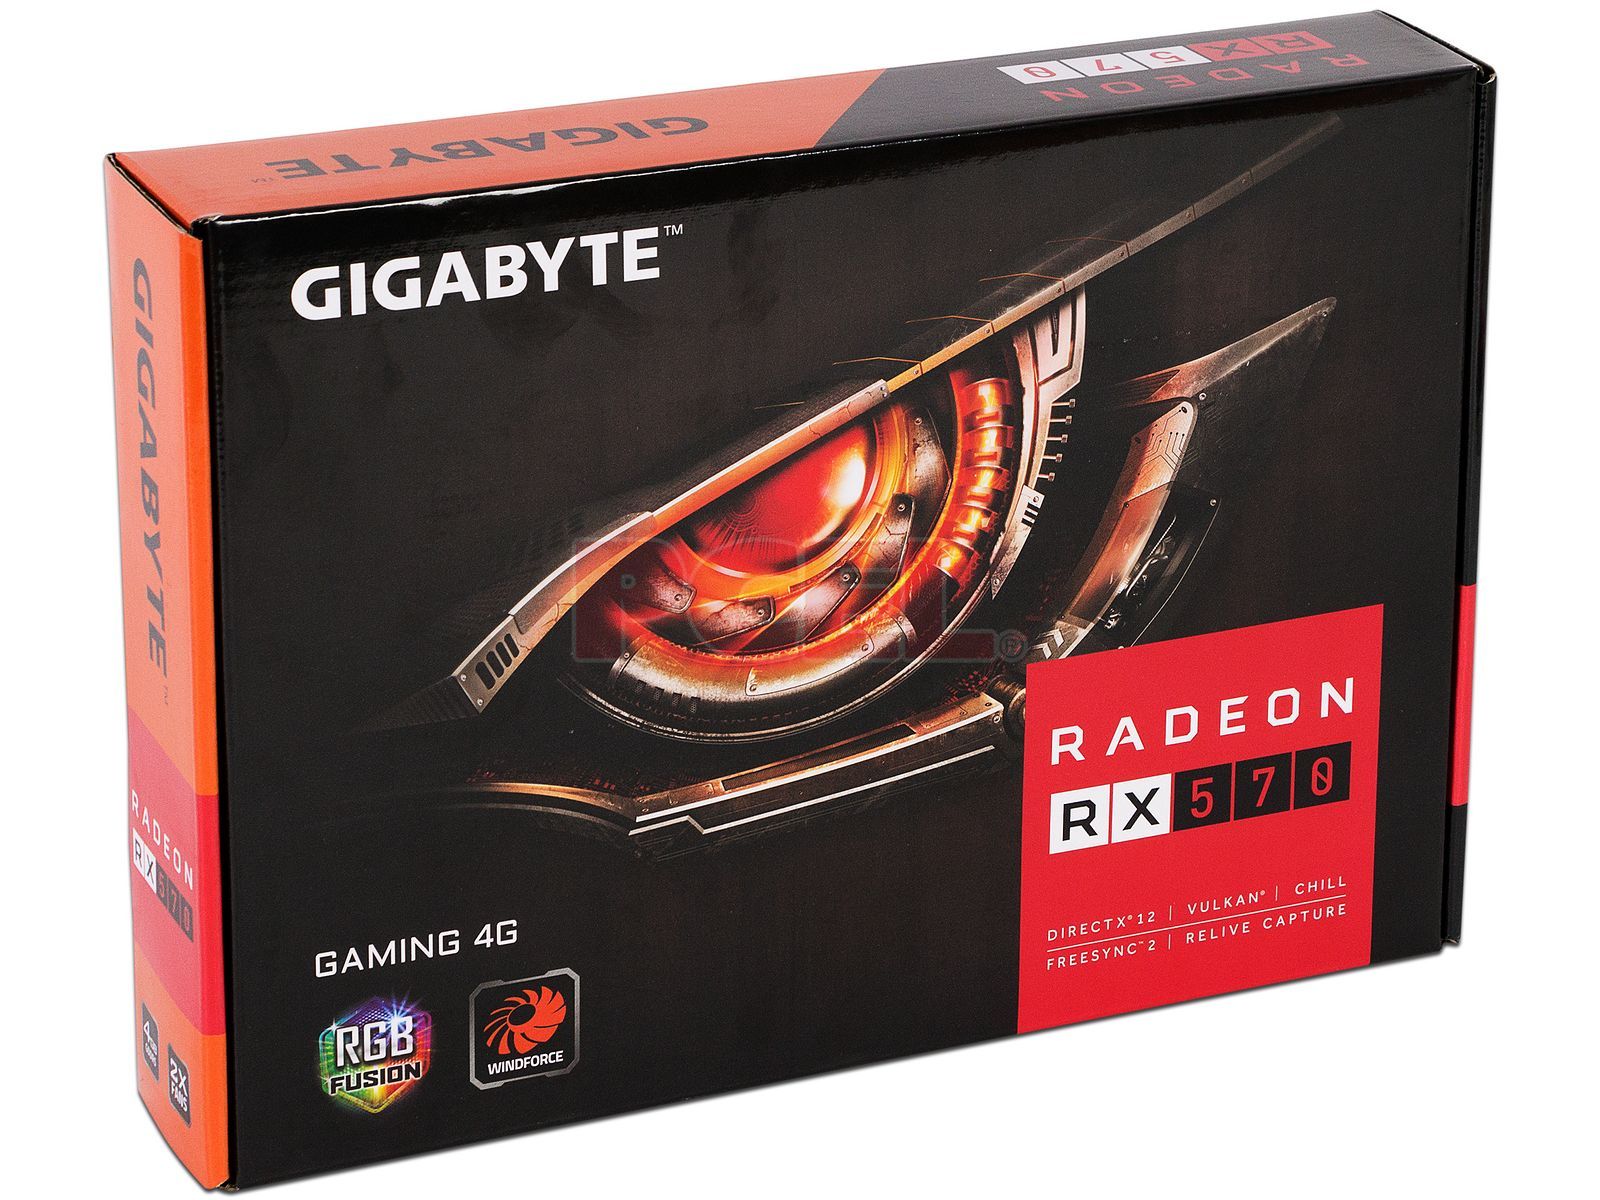 Radeon 570 gaming. RX 570 Gigabyte. Gigabyte AMD Radeon RX 570. Gigabyte RX 570 4gb Gaming. Gigabyte 570 подсветка видеокарта.